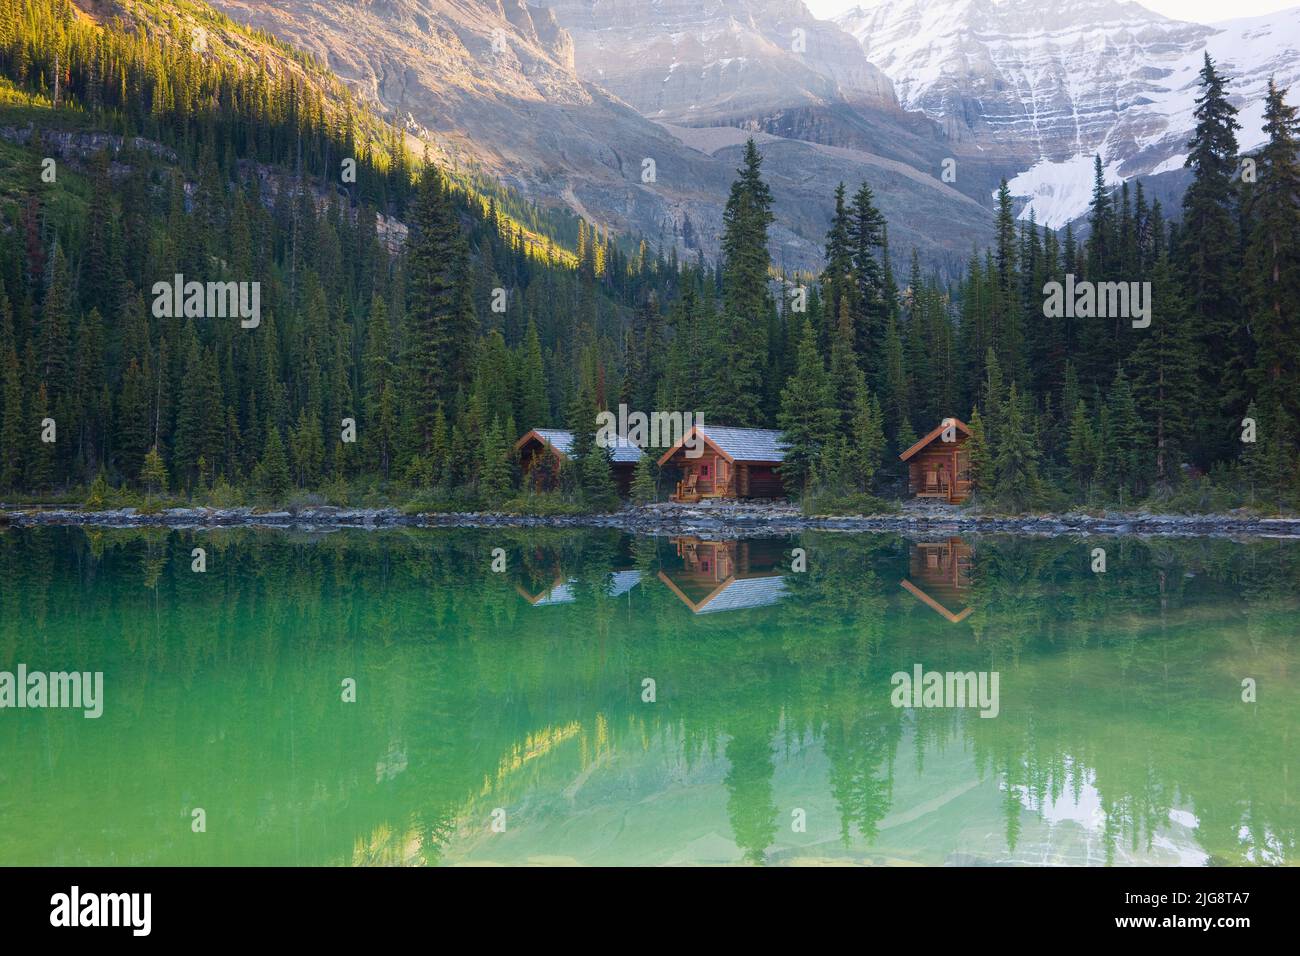 Lake O'Hara, Lodge cabins, Yoho National Park, British Columbia, Canada Stock Photo